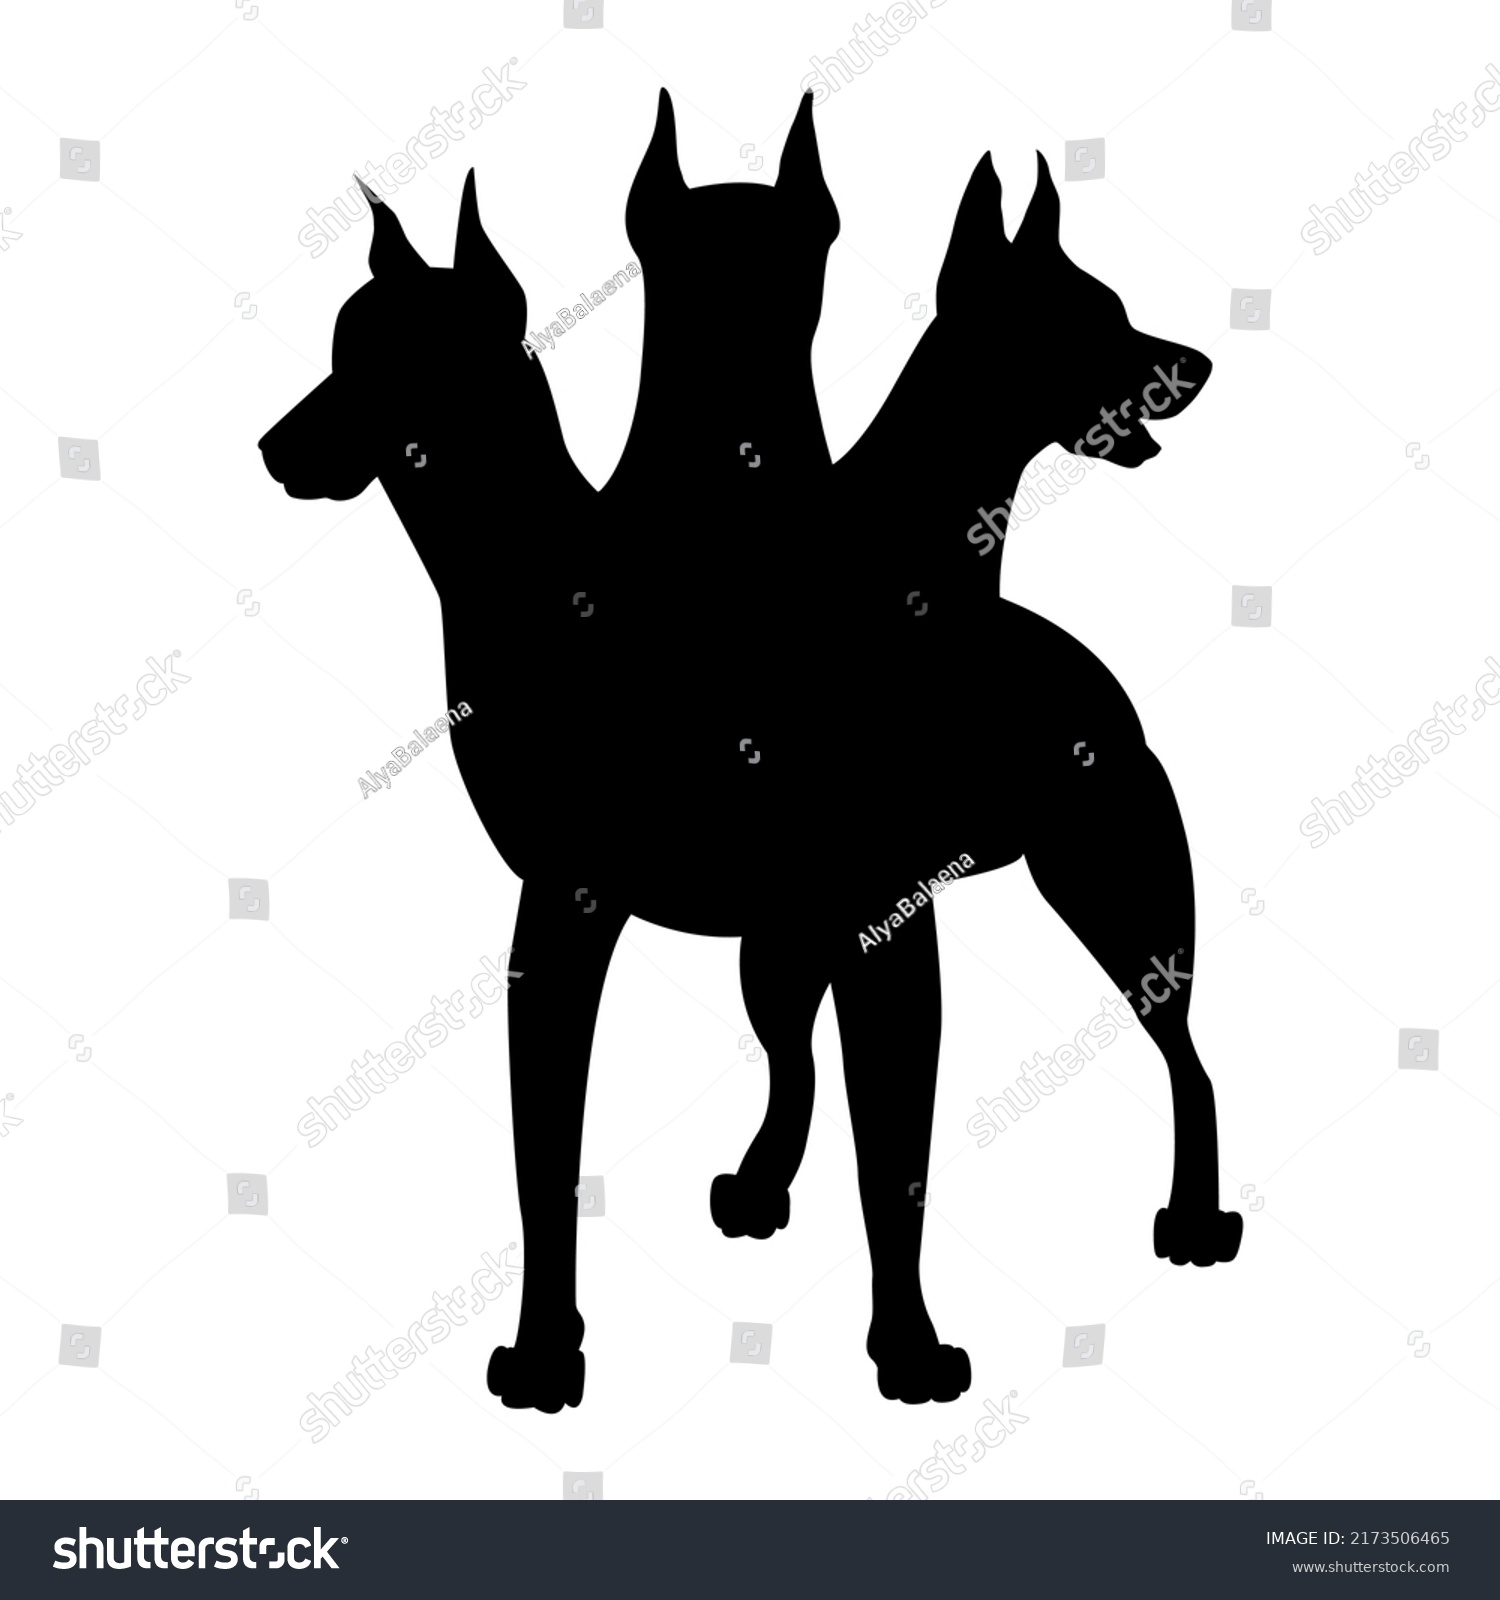 SVG of Multi headed dog cerberus illustration. Silhouette illustration. Kerberos authentication logo. Mythological creature. svg